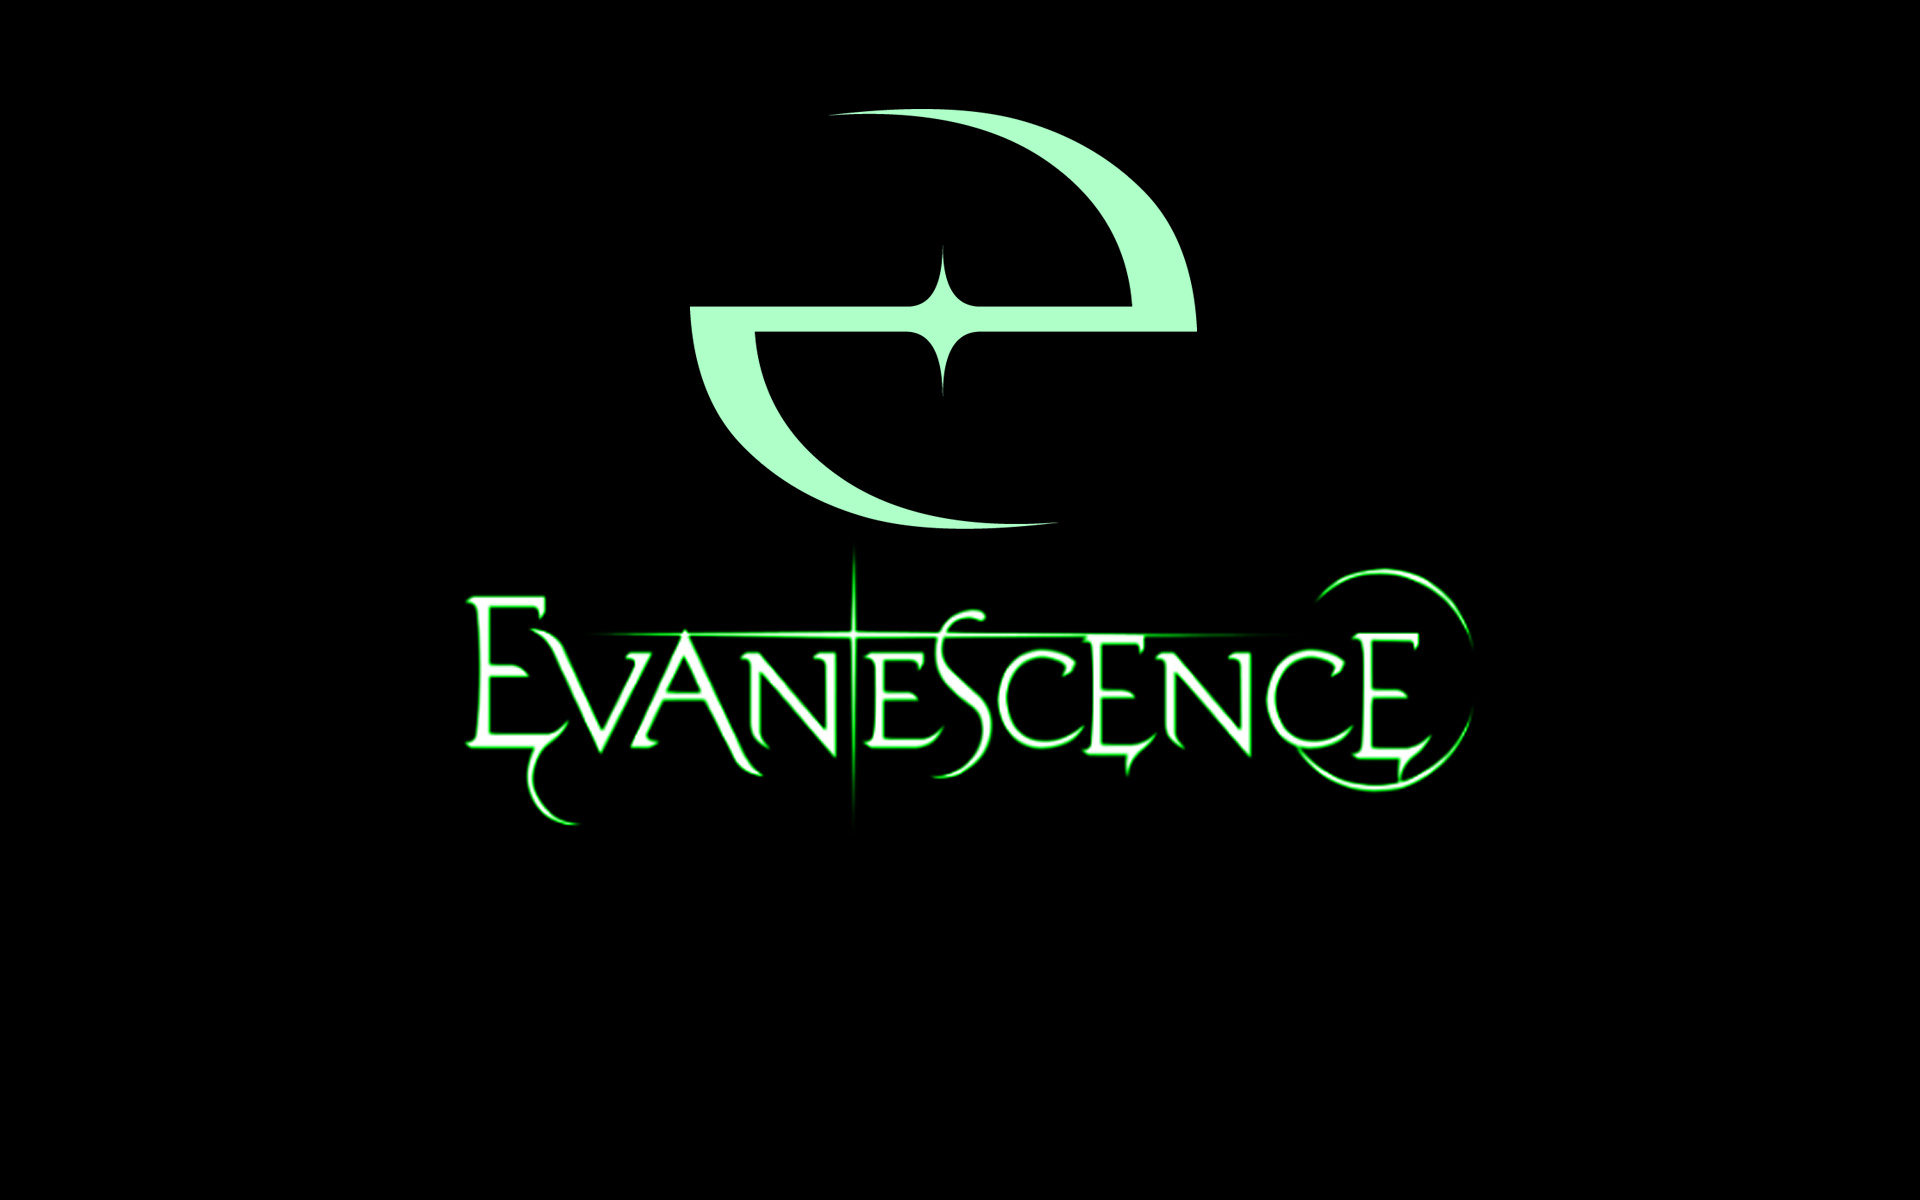 Evanescence HD wallpaper, Emotive music, Unique style, Powerful vocals, 1920x1200 HD Desktop